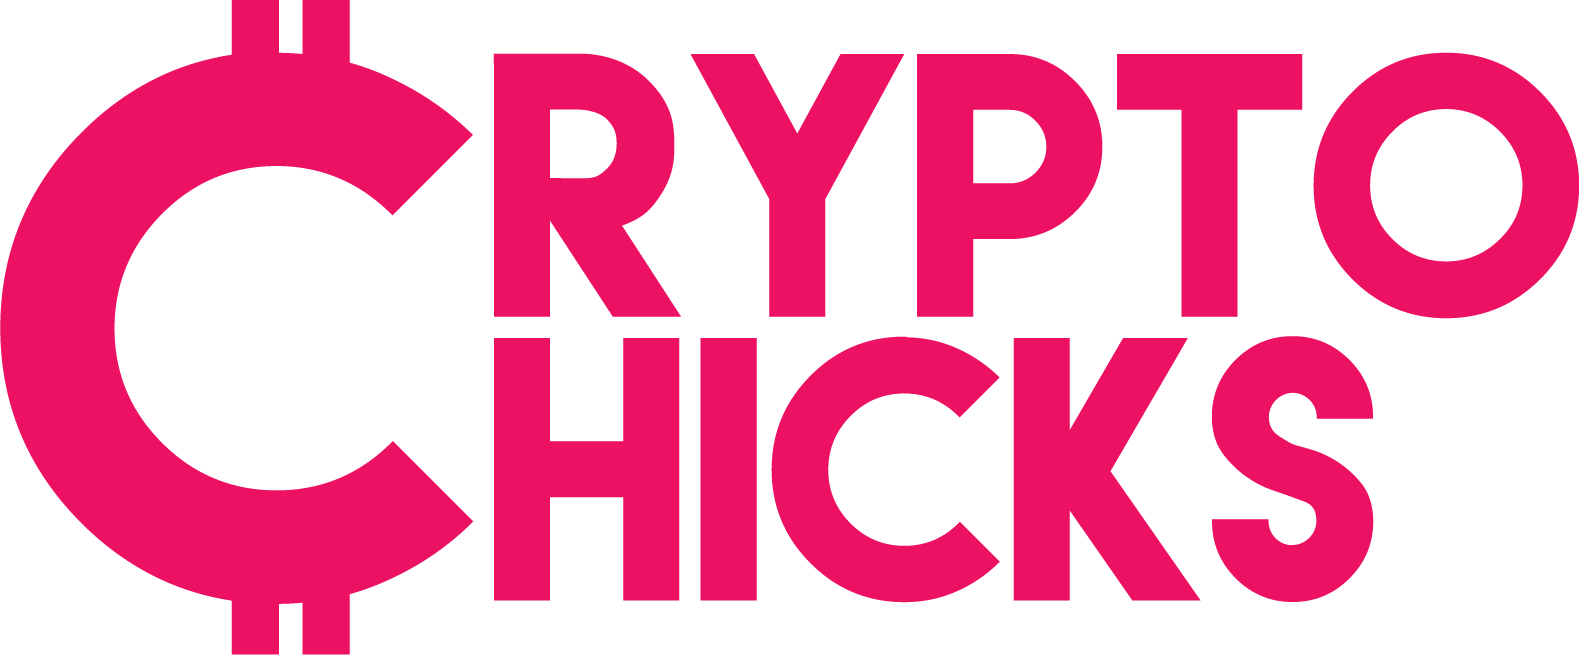 CryptoChicks